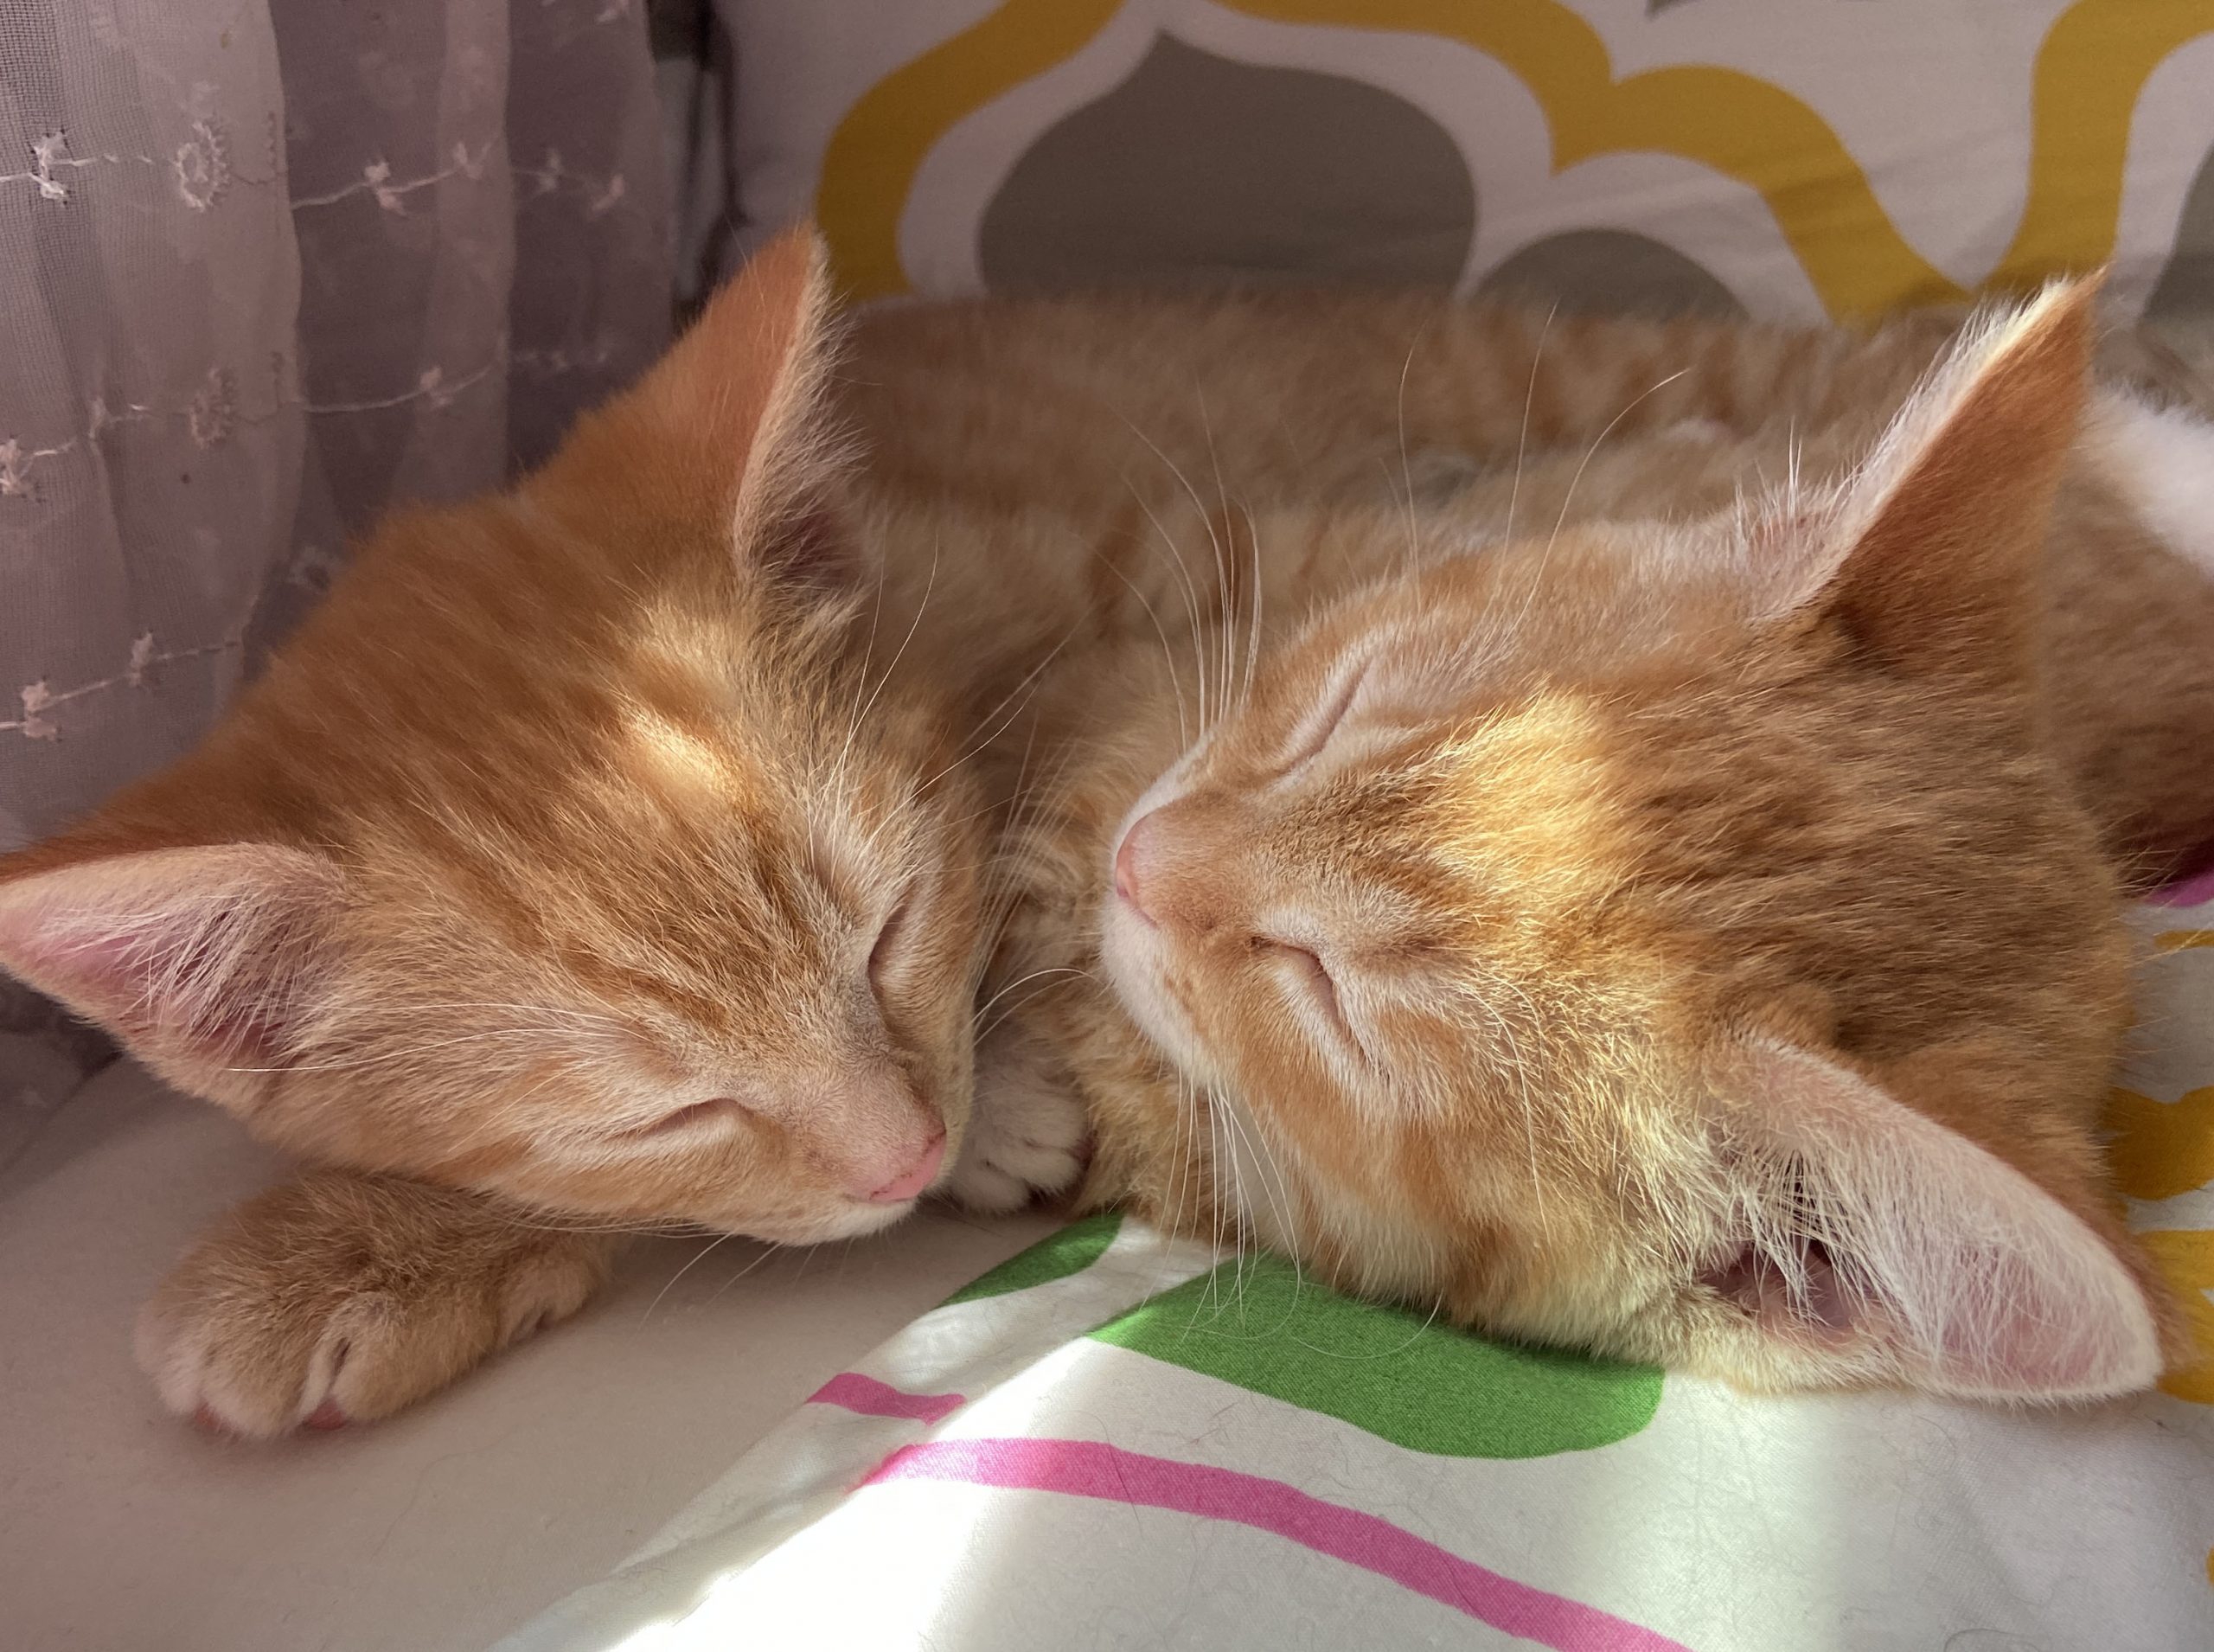 Two kittens sleeping.